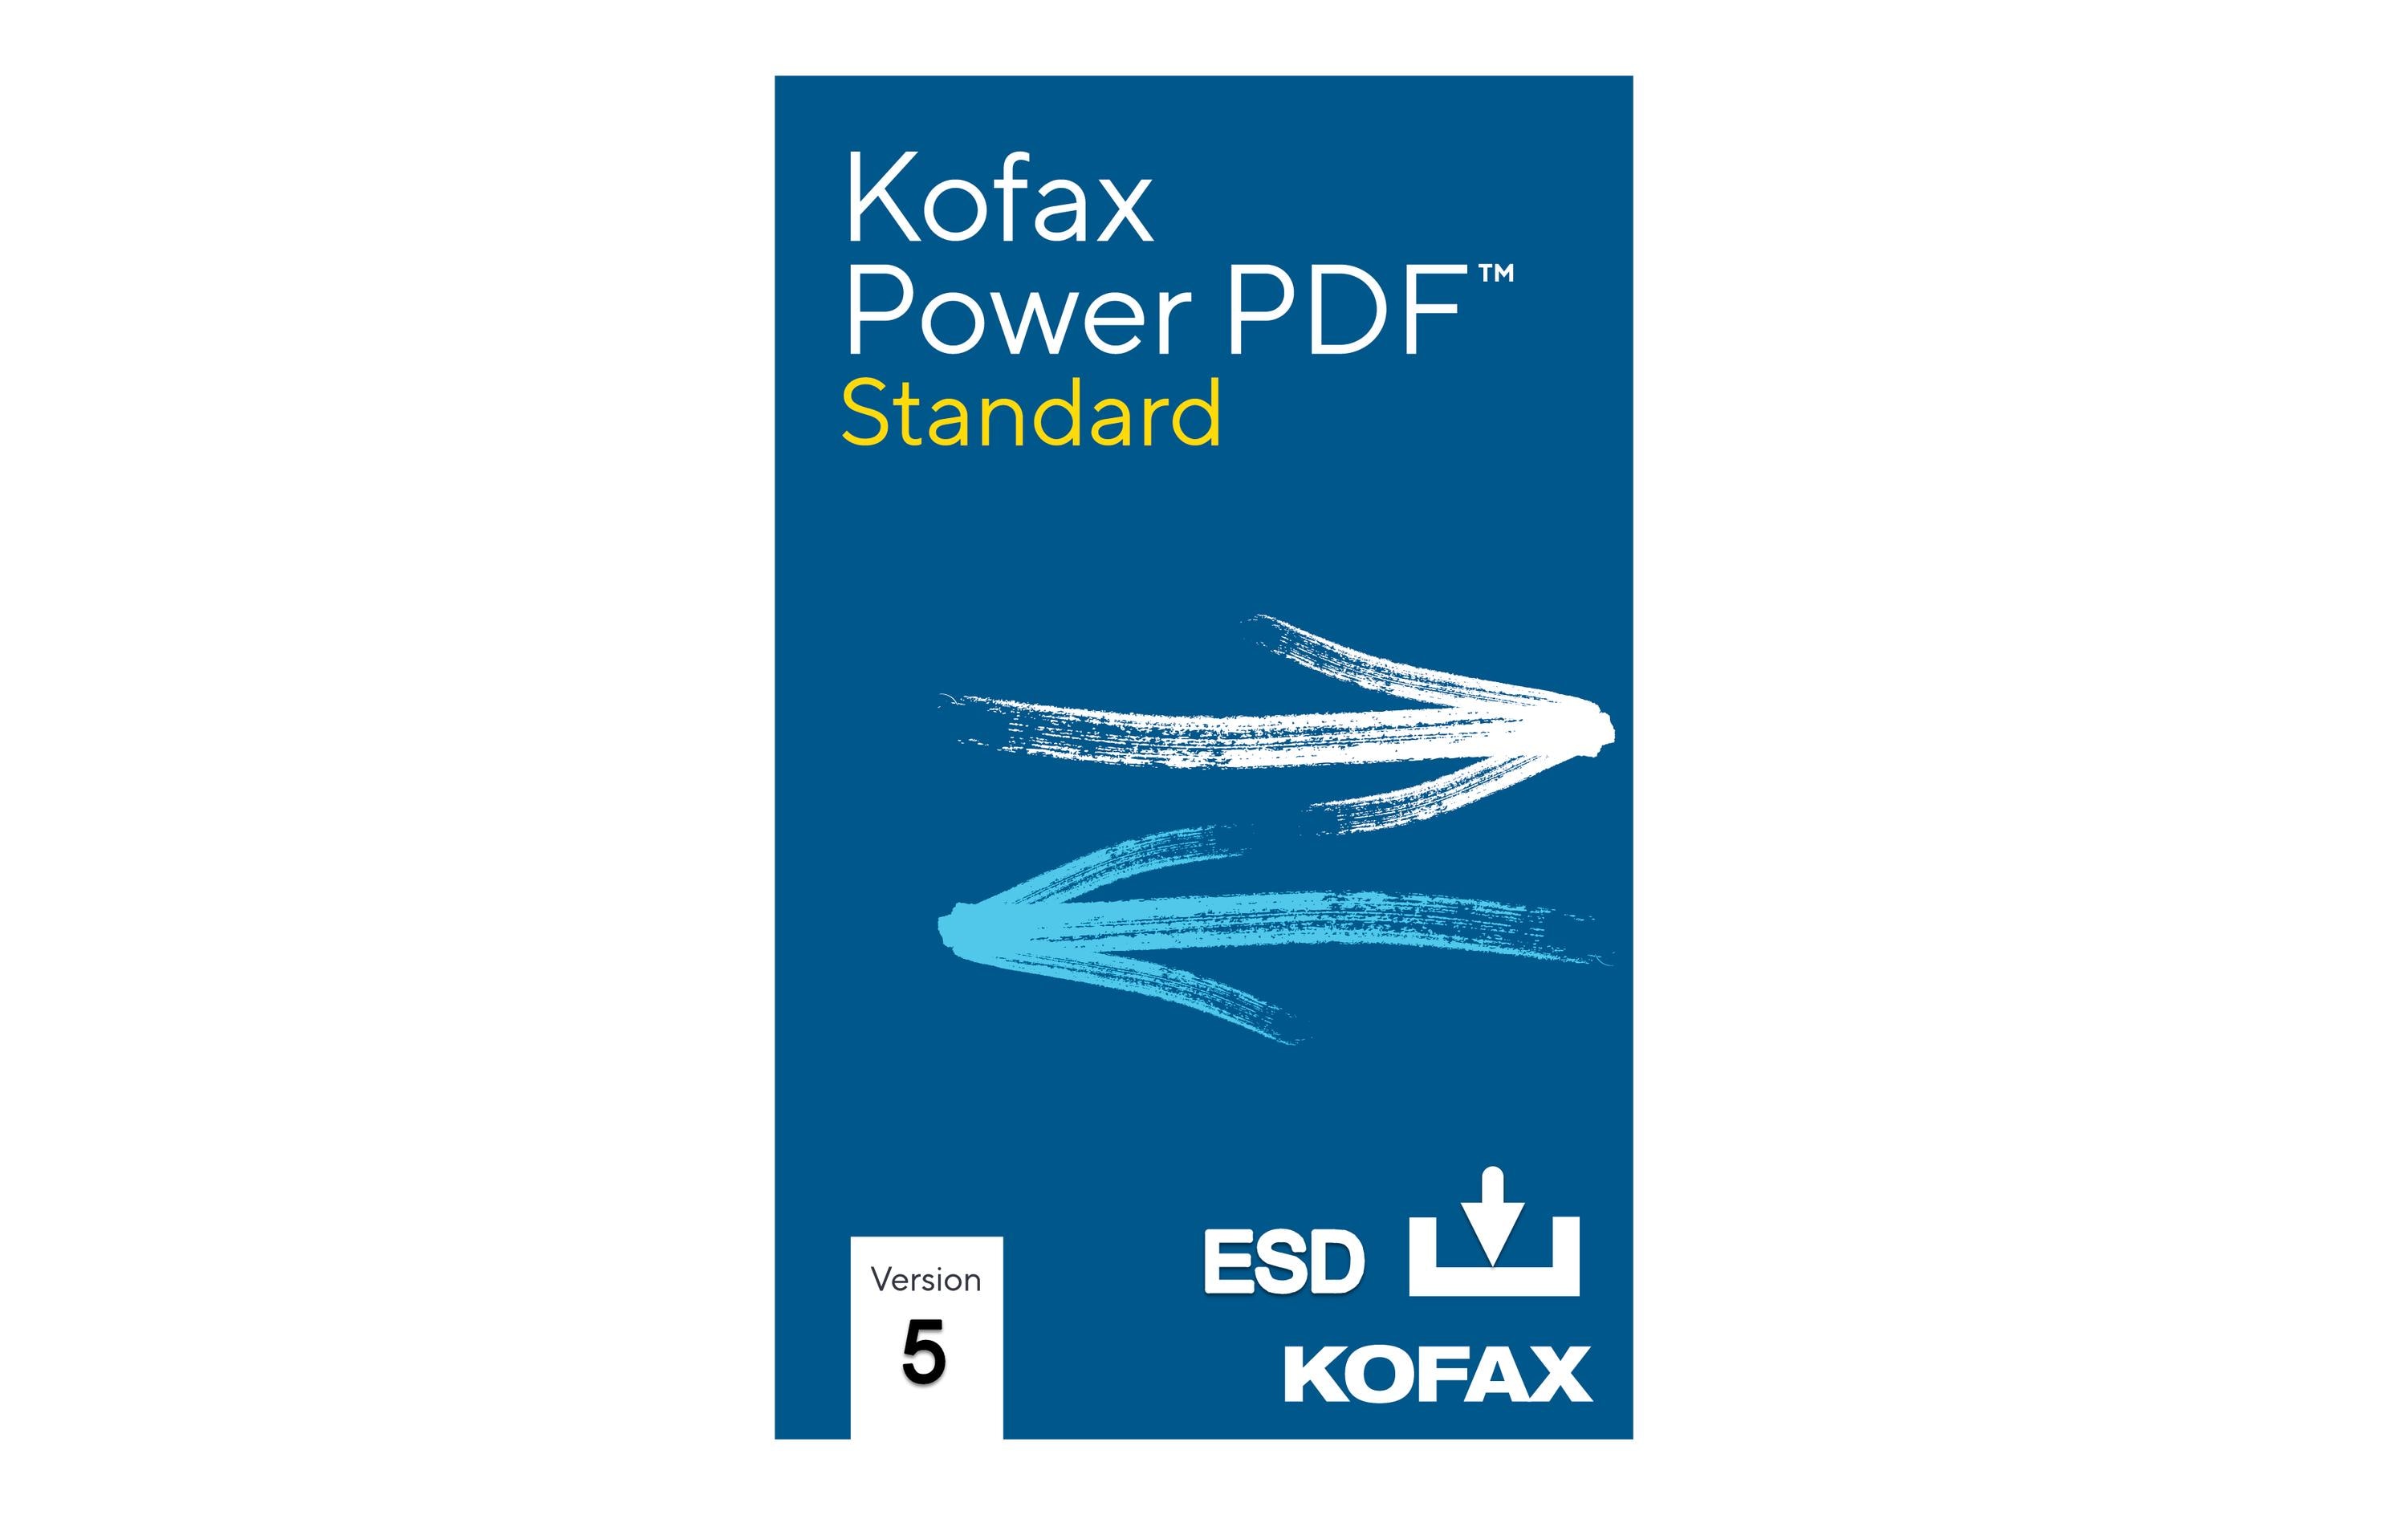 Kofax Power PDF Standard 5.0 ESD, Vollversion, Multilingual